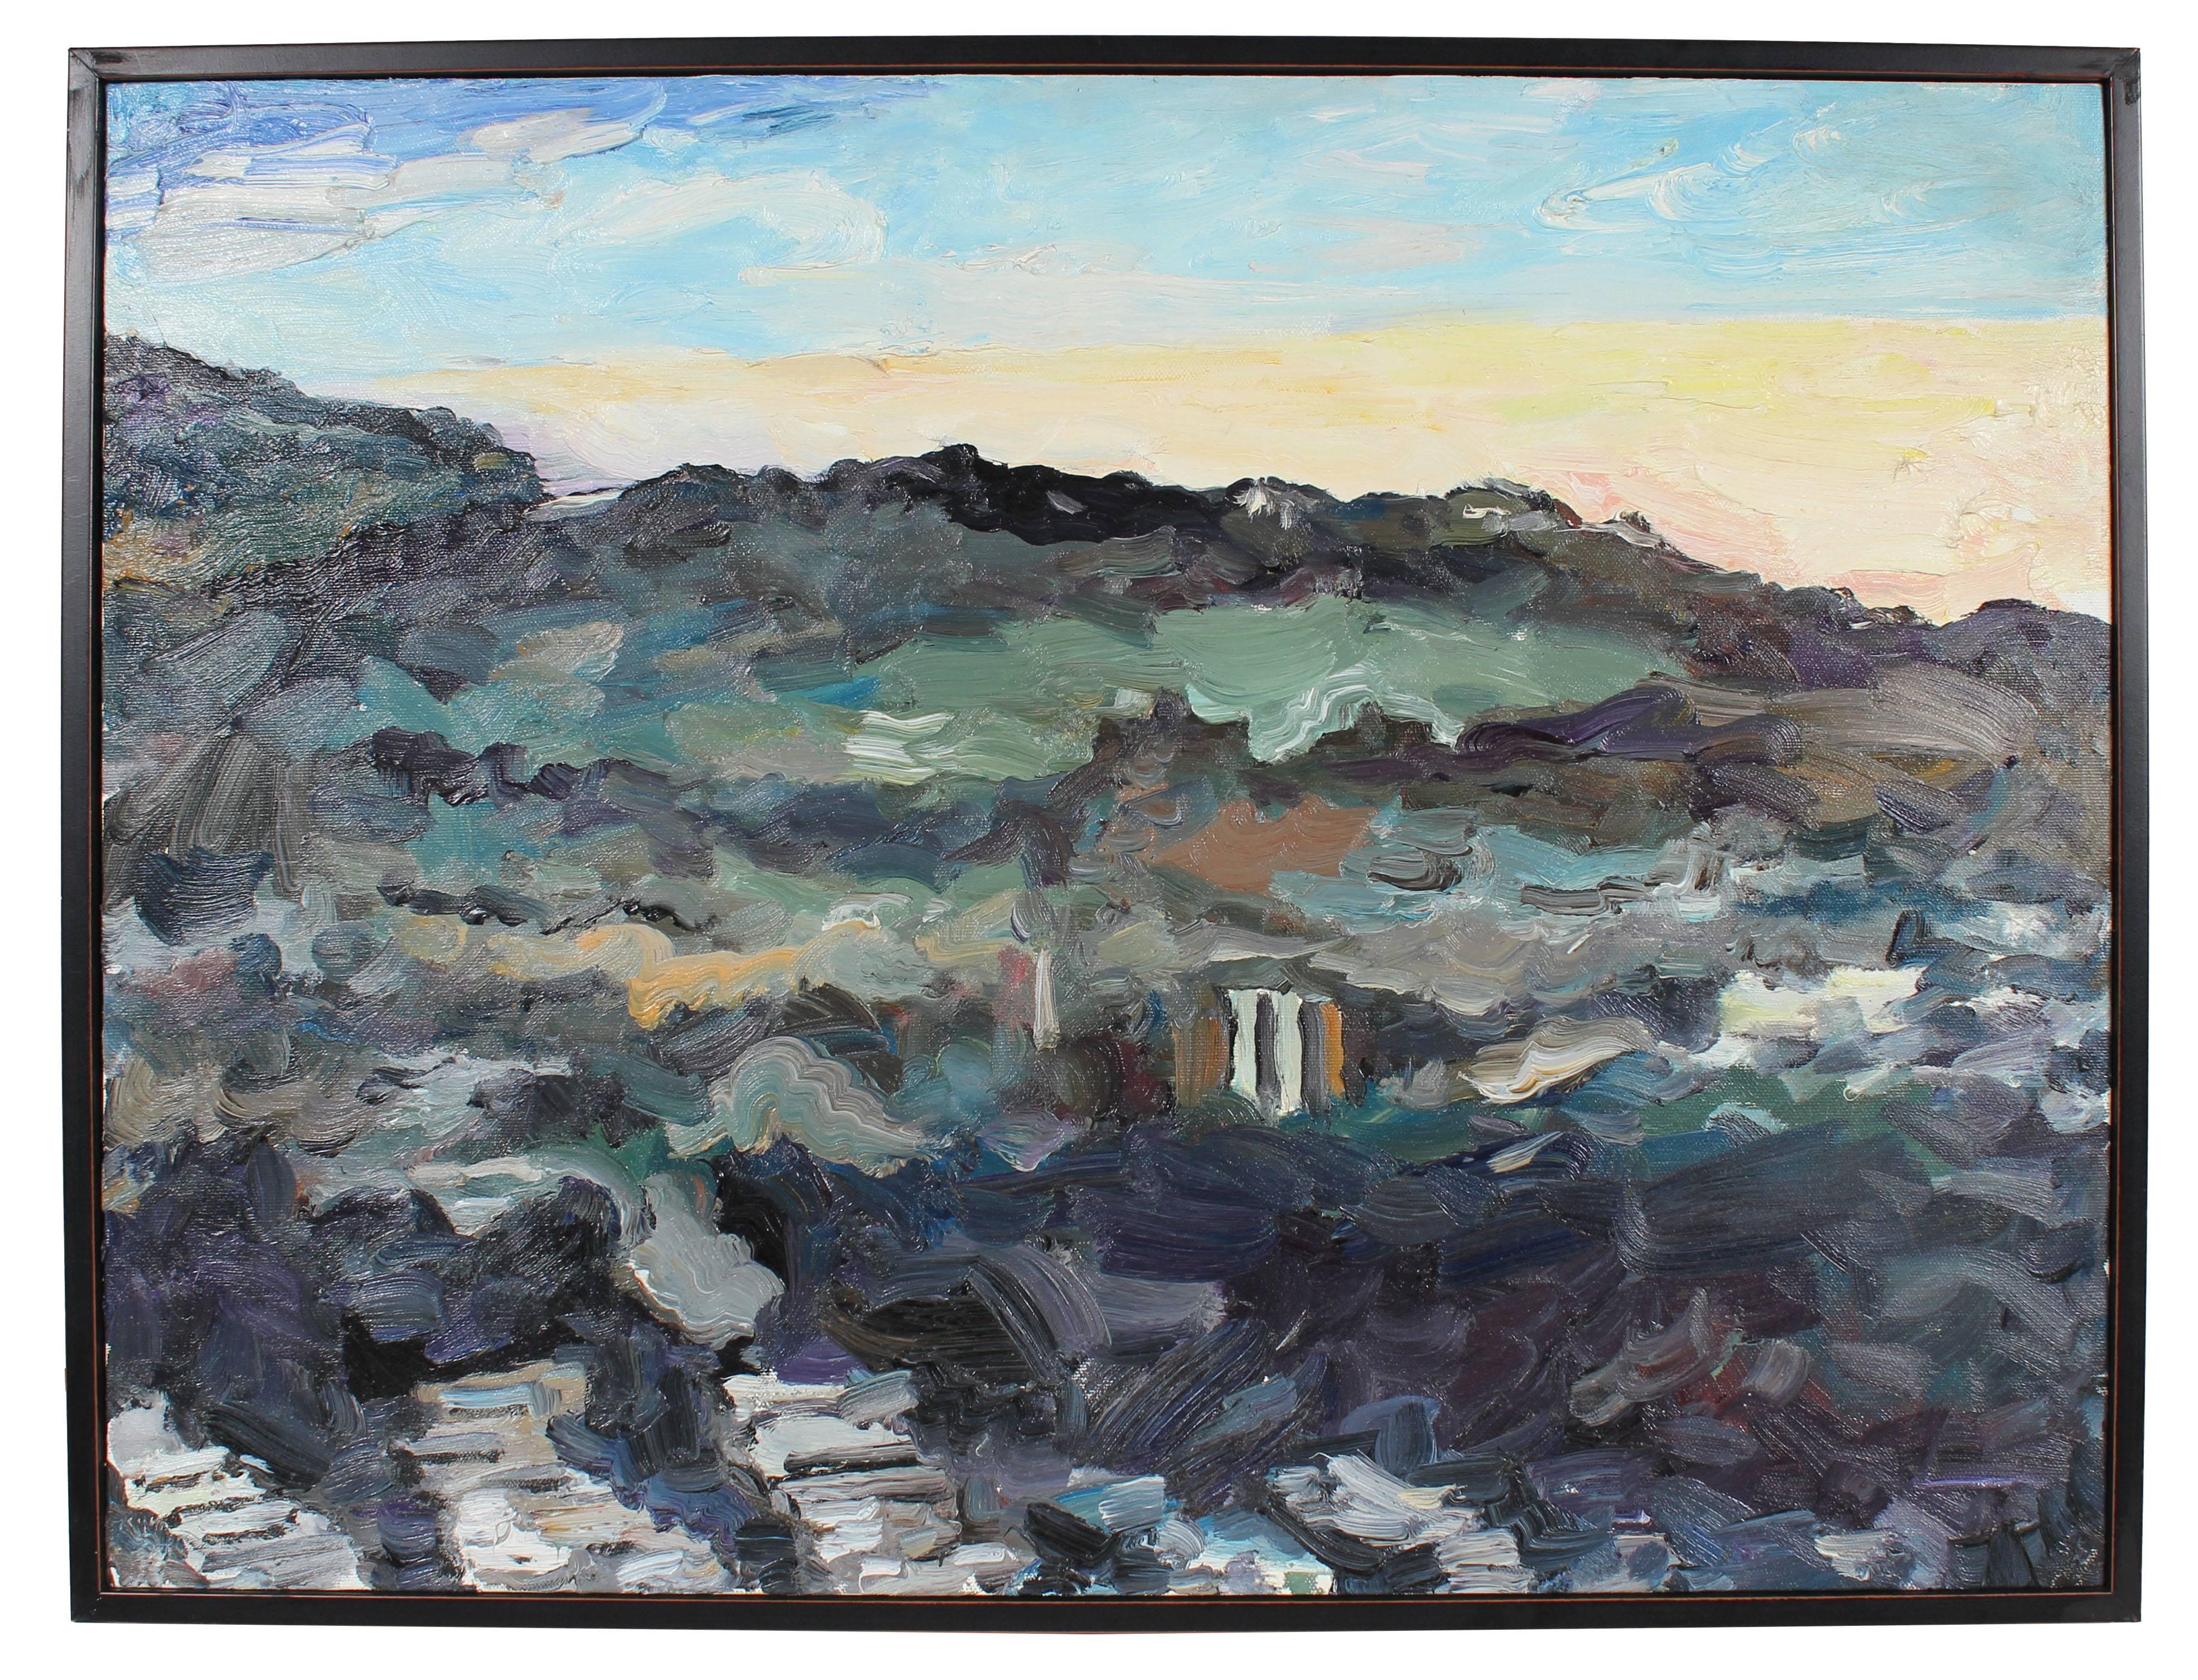 Jack Freeman Landscape Painting - "Merced" Bay Area Landscape at Dusk, Oil Painting, 2004